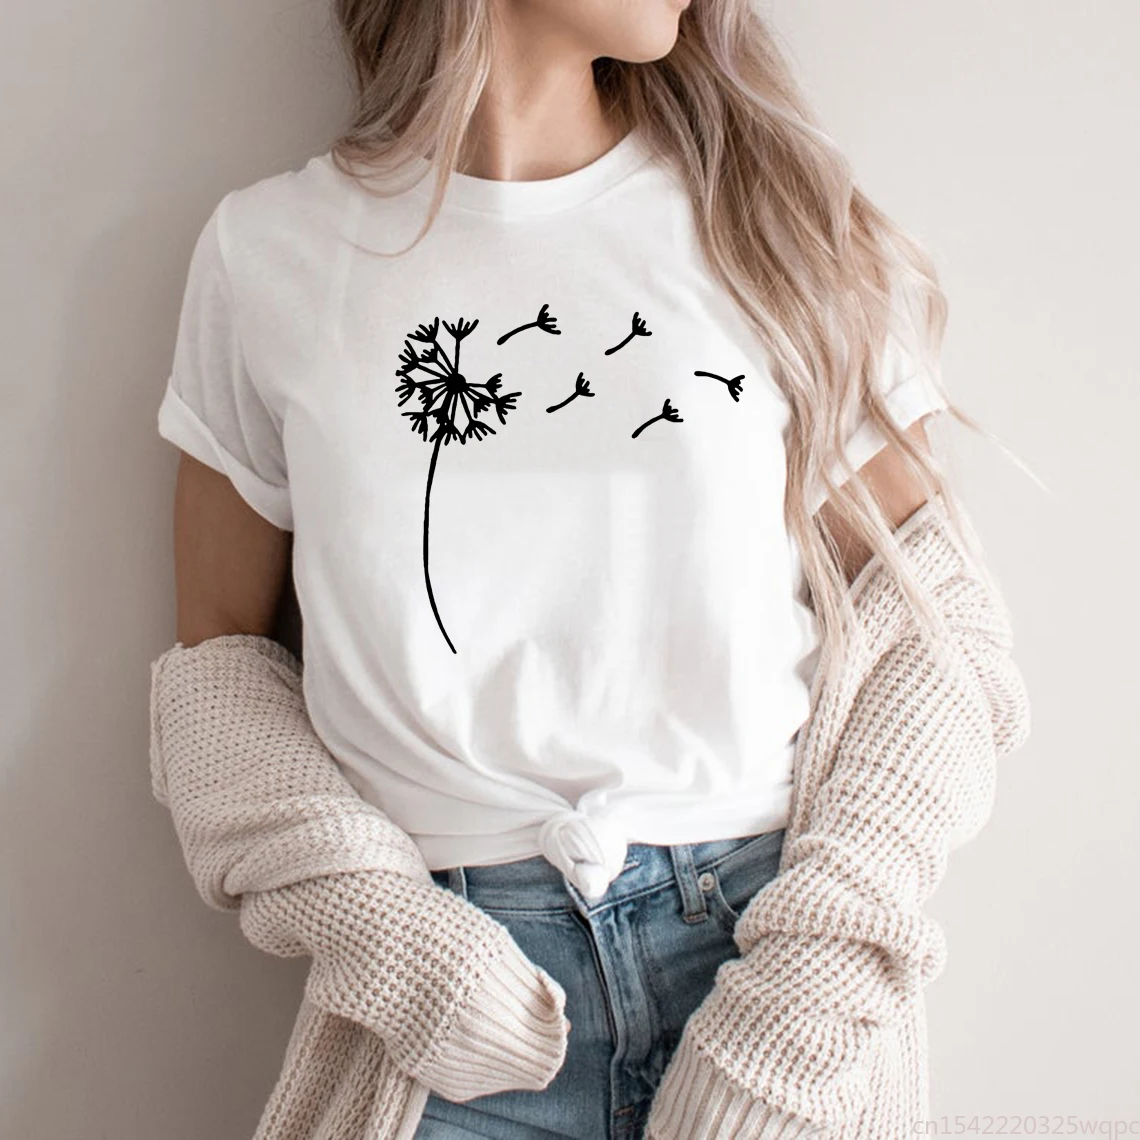 

Dandelion Just Breathe Shirt Relax Graphic Tee Just Breathe T-shirt Cute Motivational Positive Shirts Women Tops